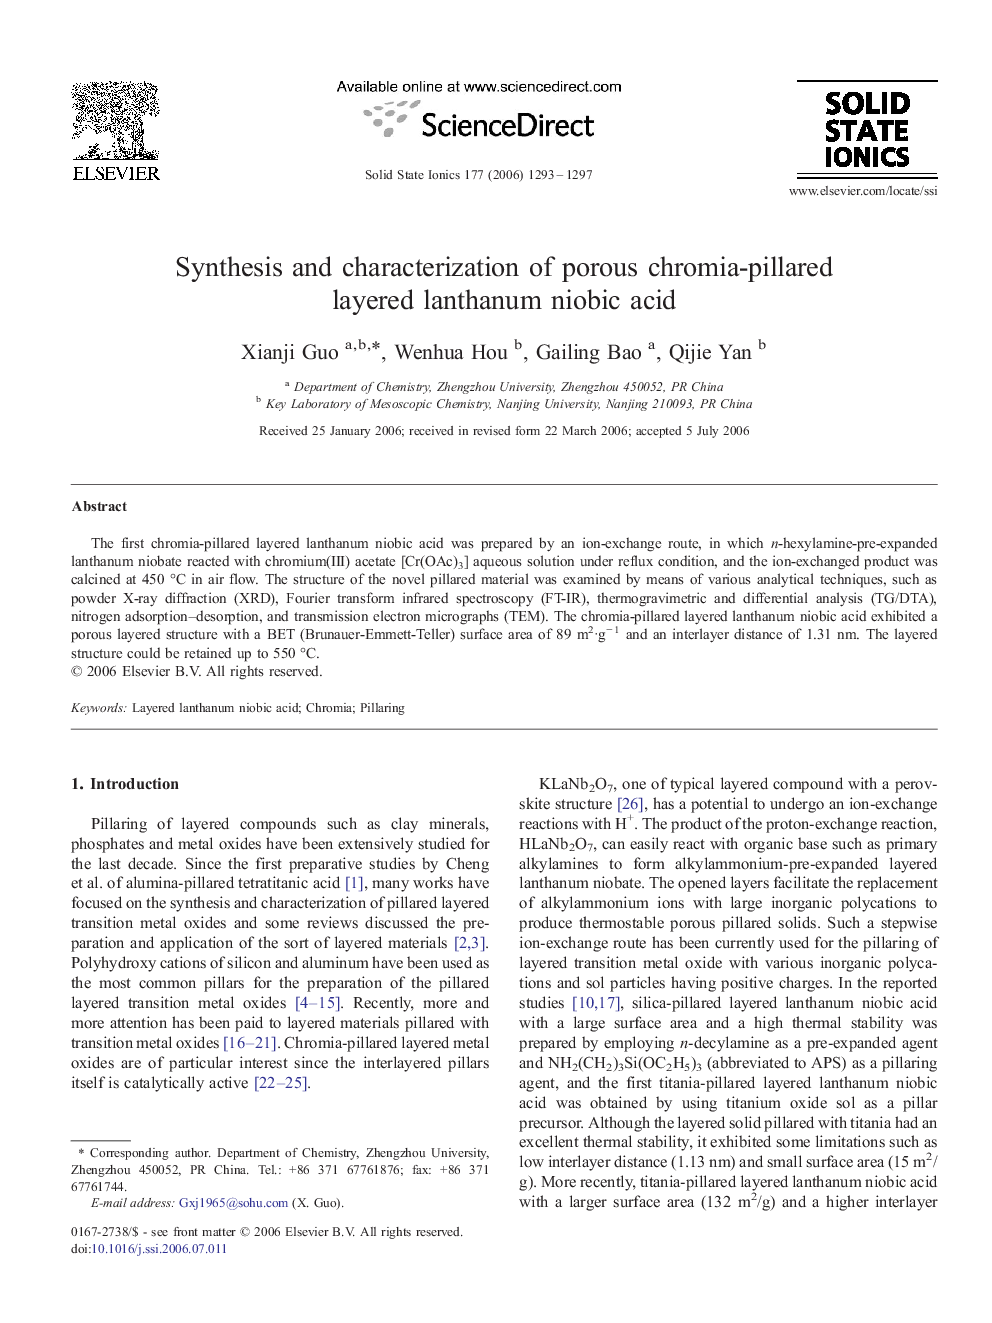 Synthesis and characterization of porous chromia-pillared layered lanthanum niobic acid